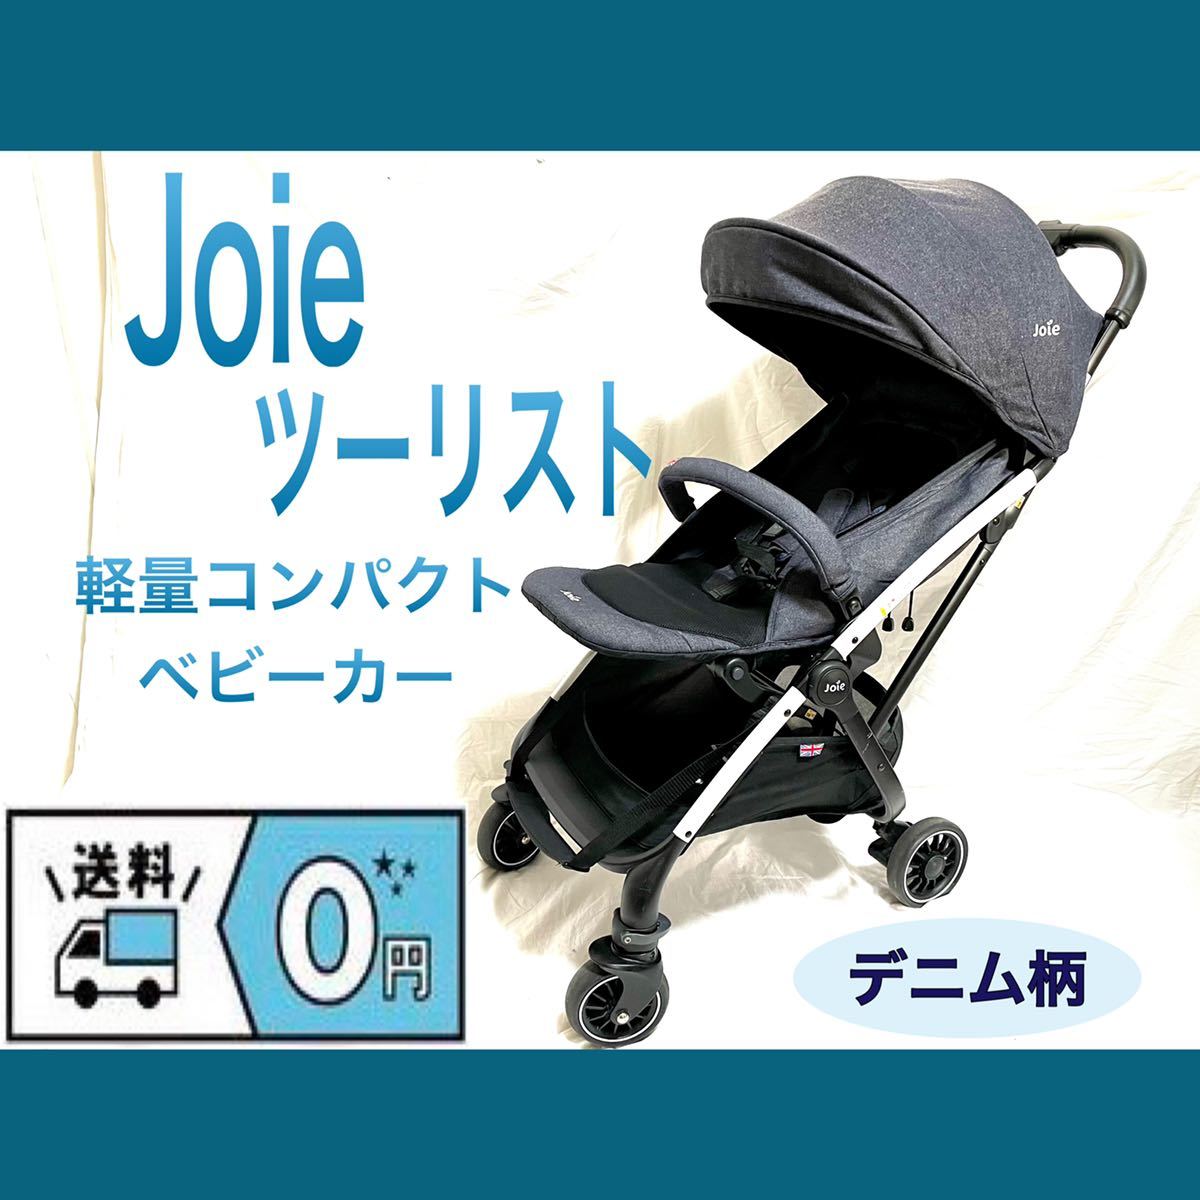 Joie/ジョイー 軽量コンパクトベビーカー ツーリスト(デニム)KATOJI